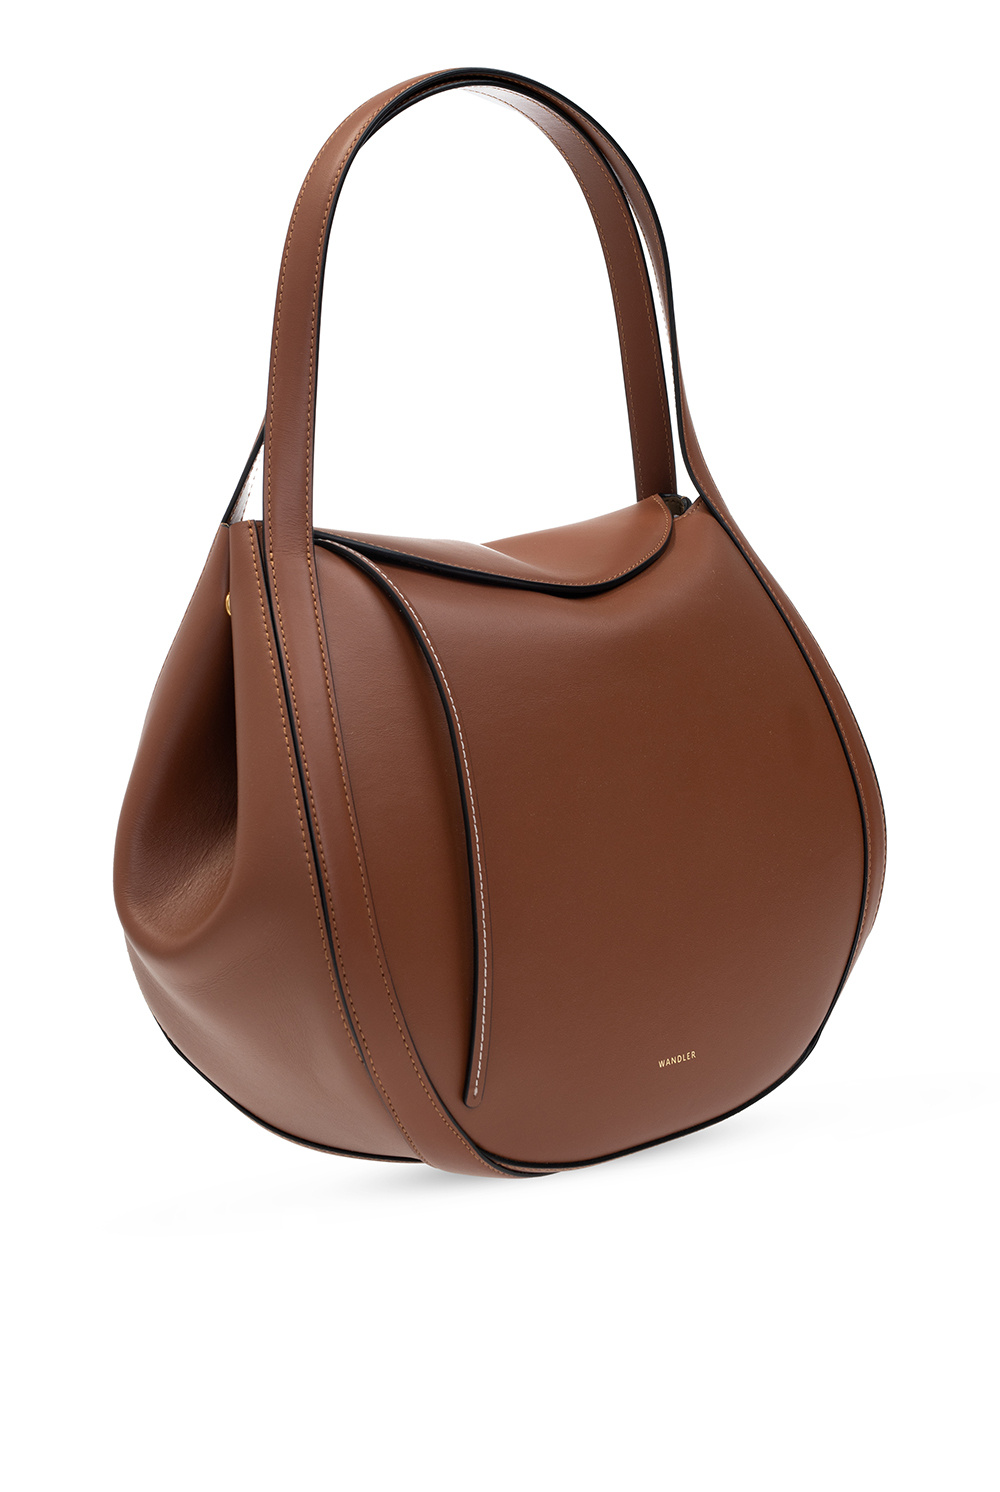 Wandler ‘Lin’ handbag